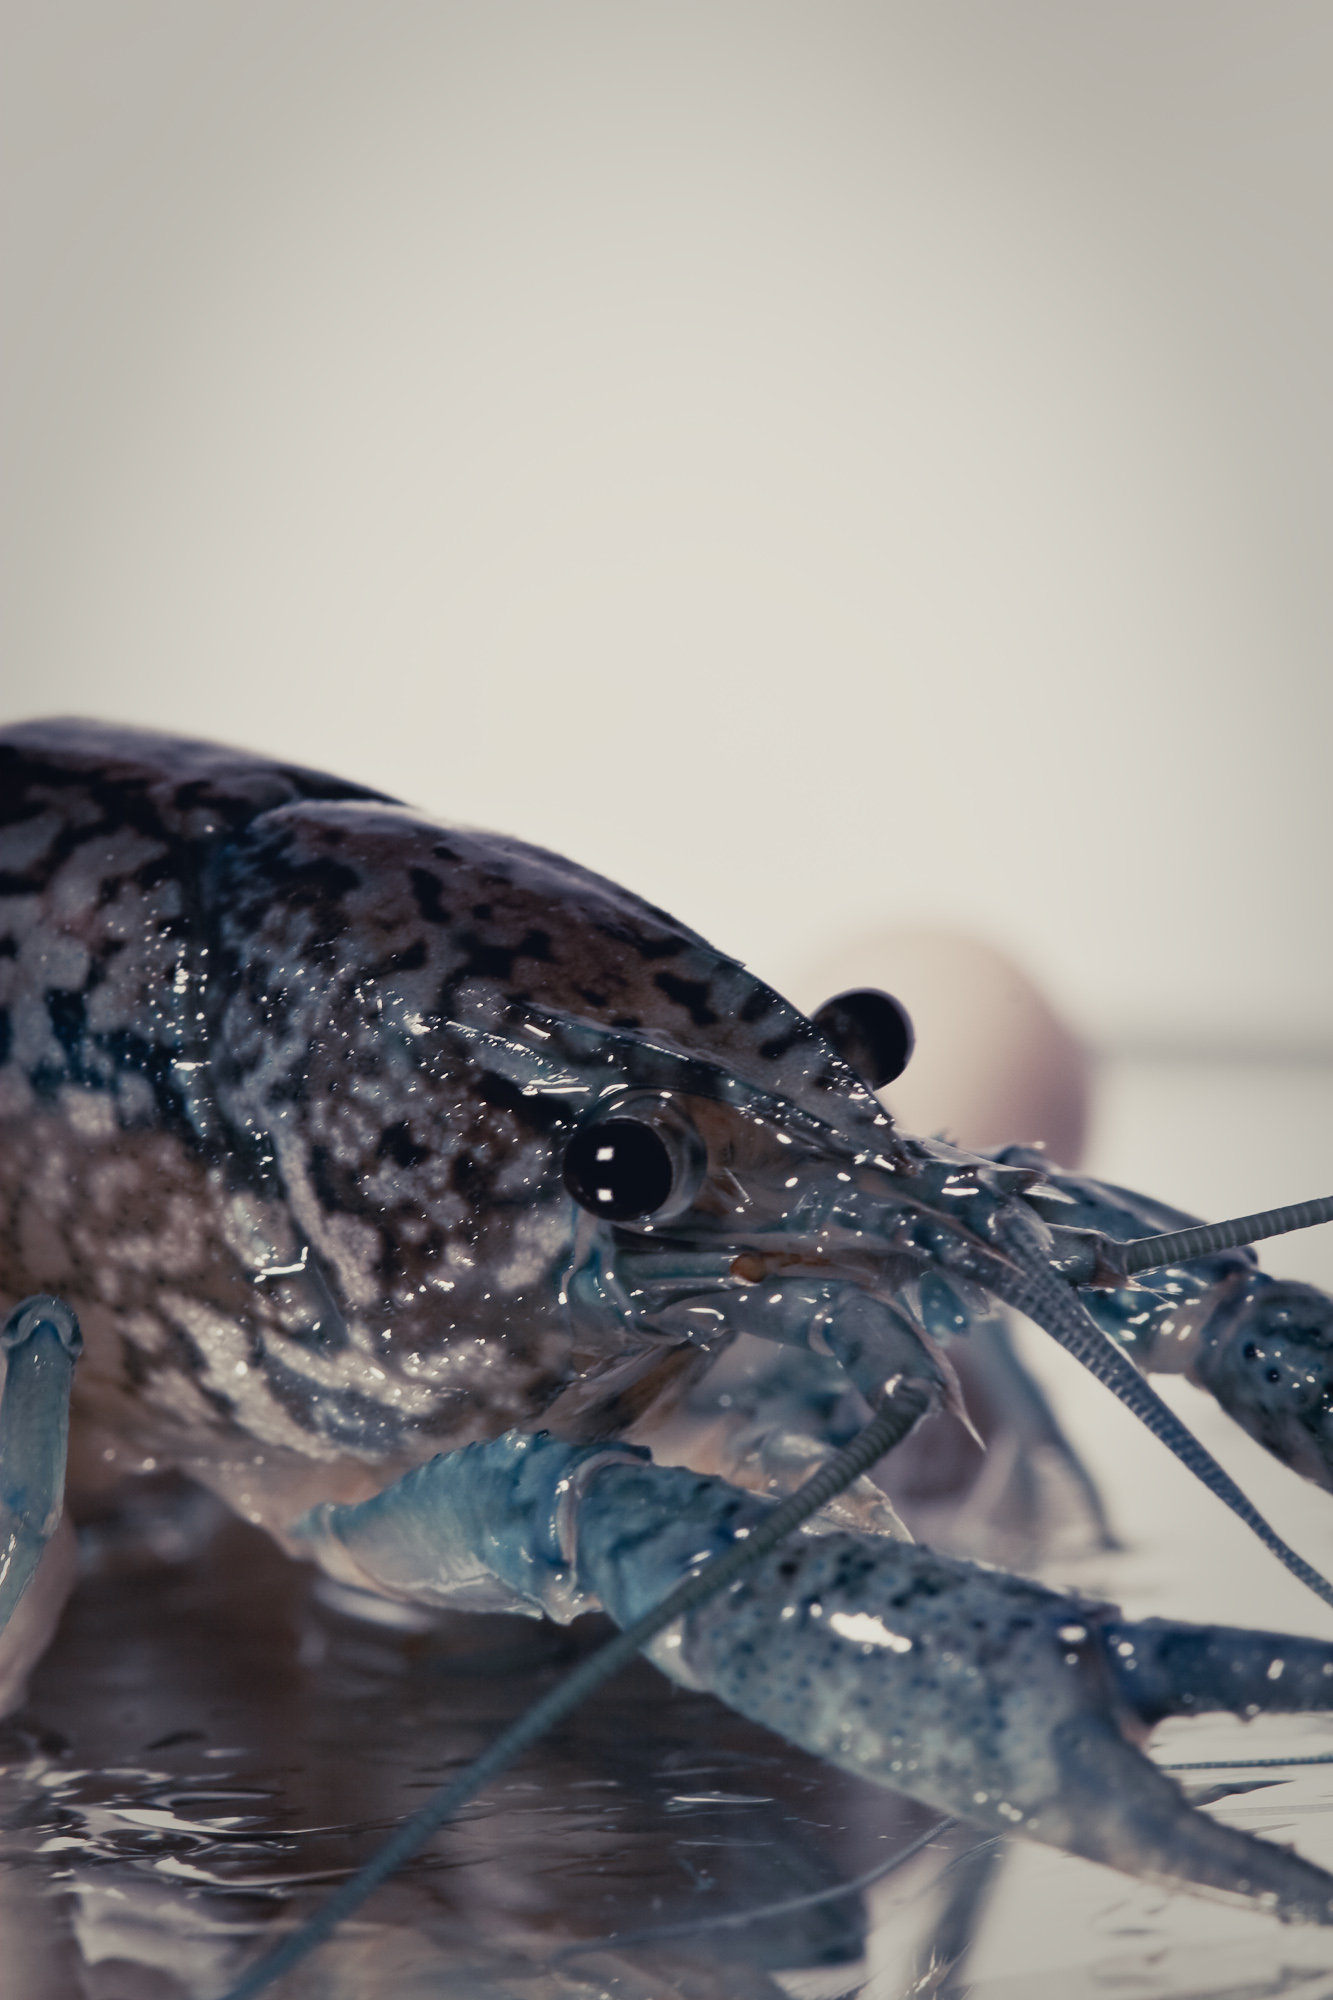 Crayfish photo